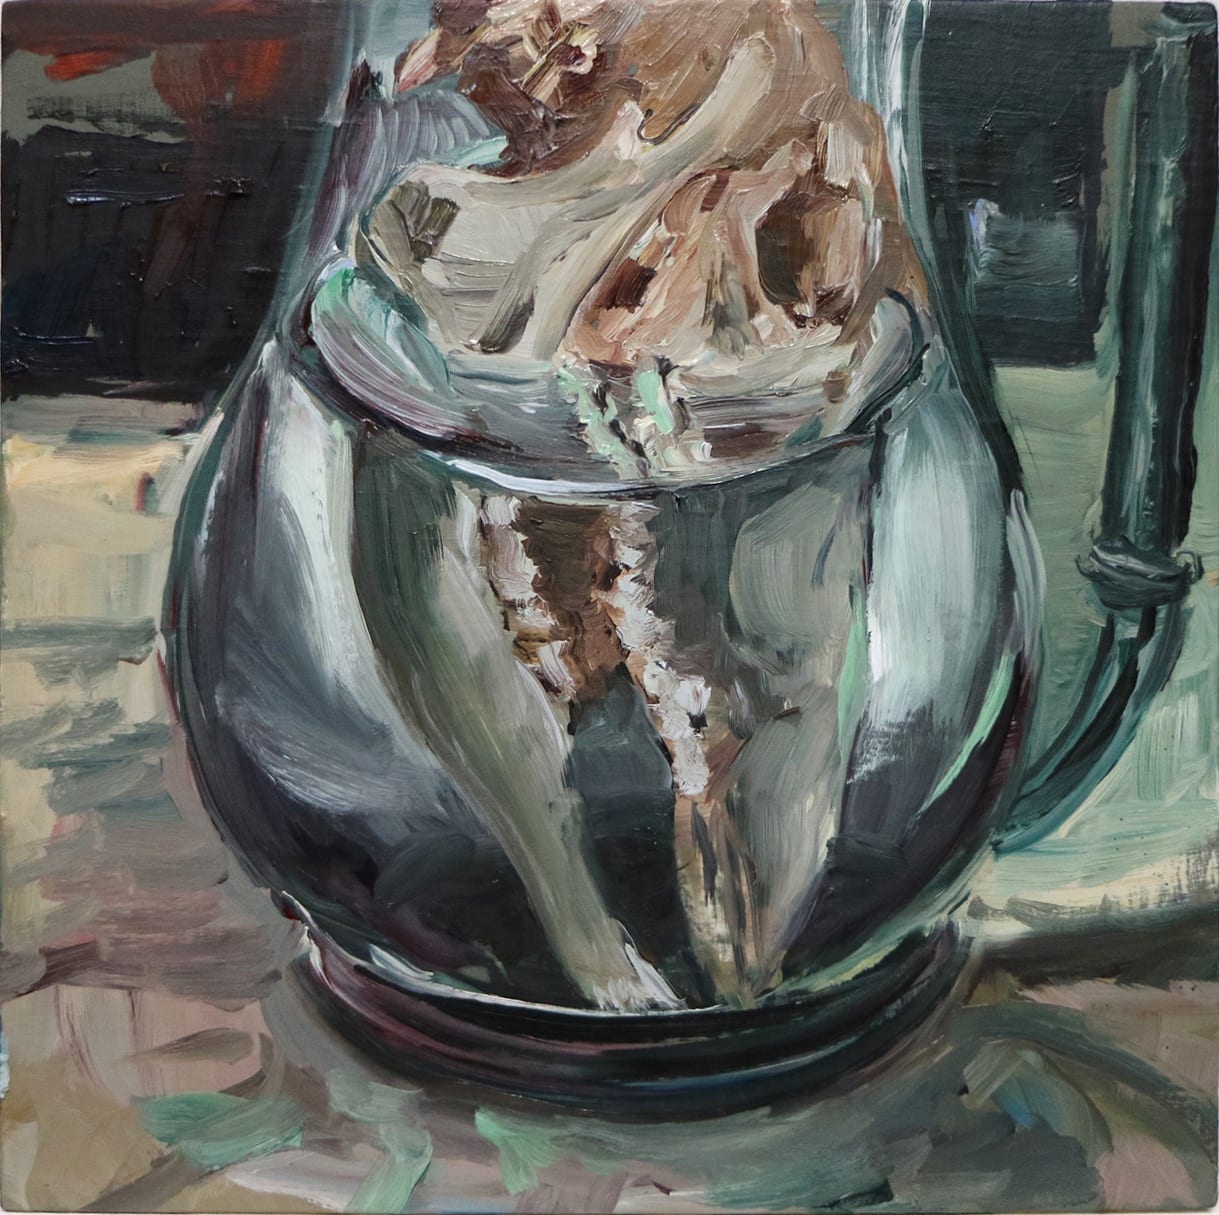 Eduardo Berliner, Jarra [Jar], 2017